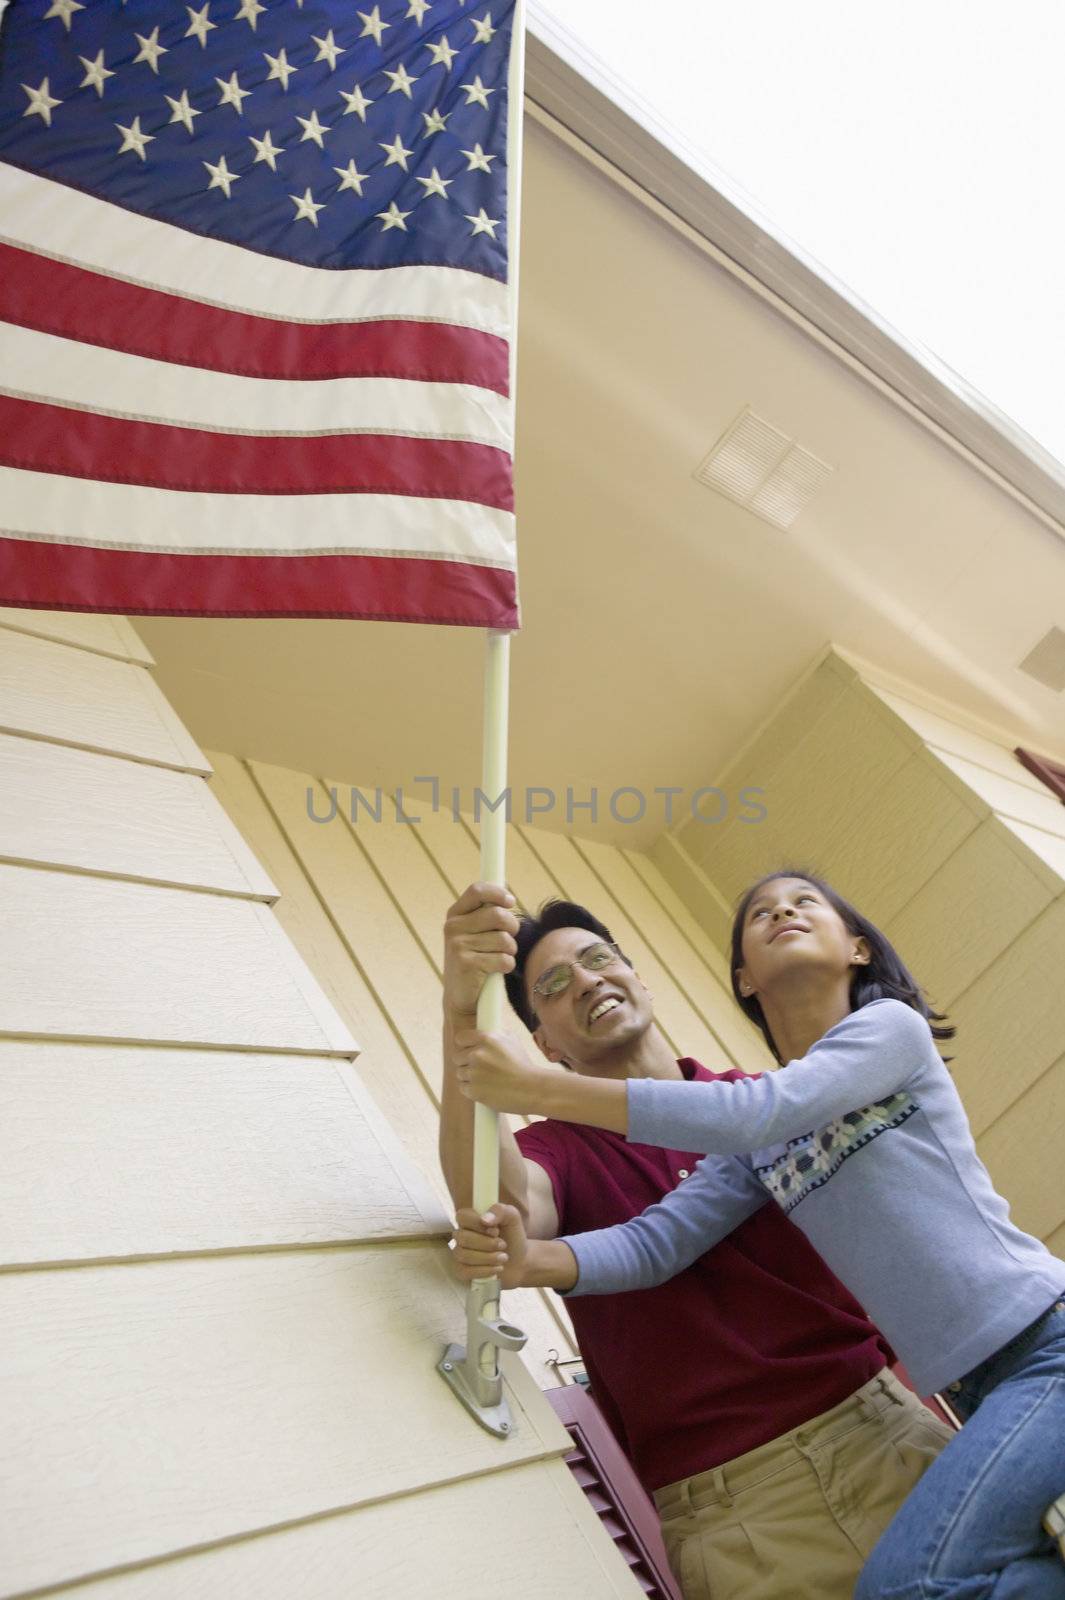 Raising the flag at home by edbockstock